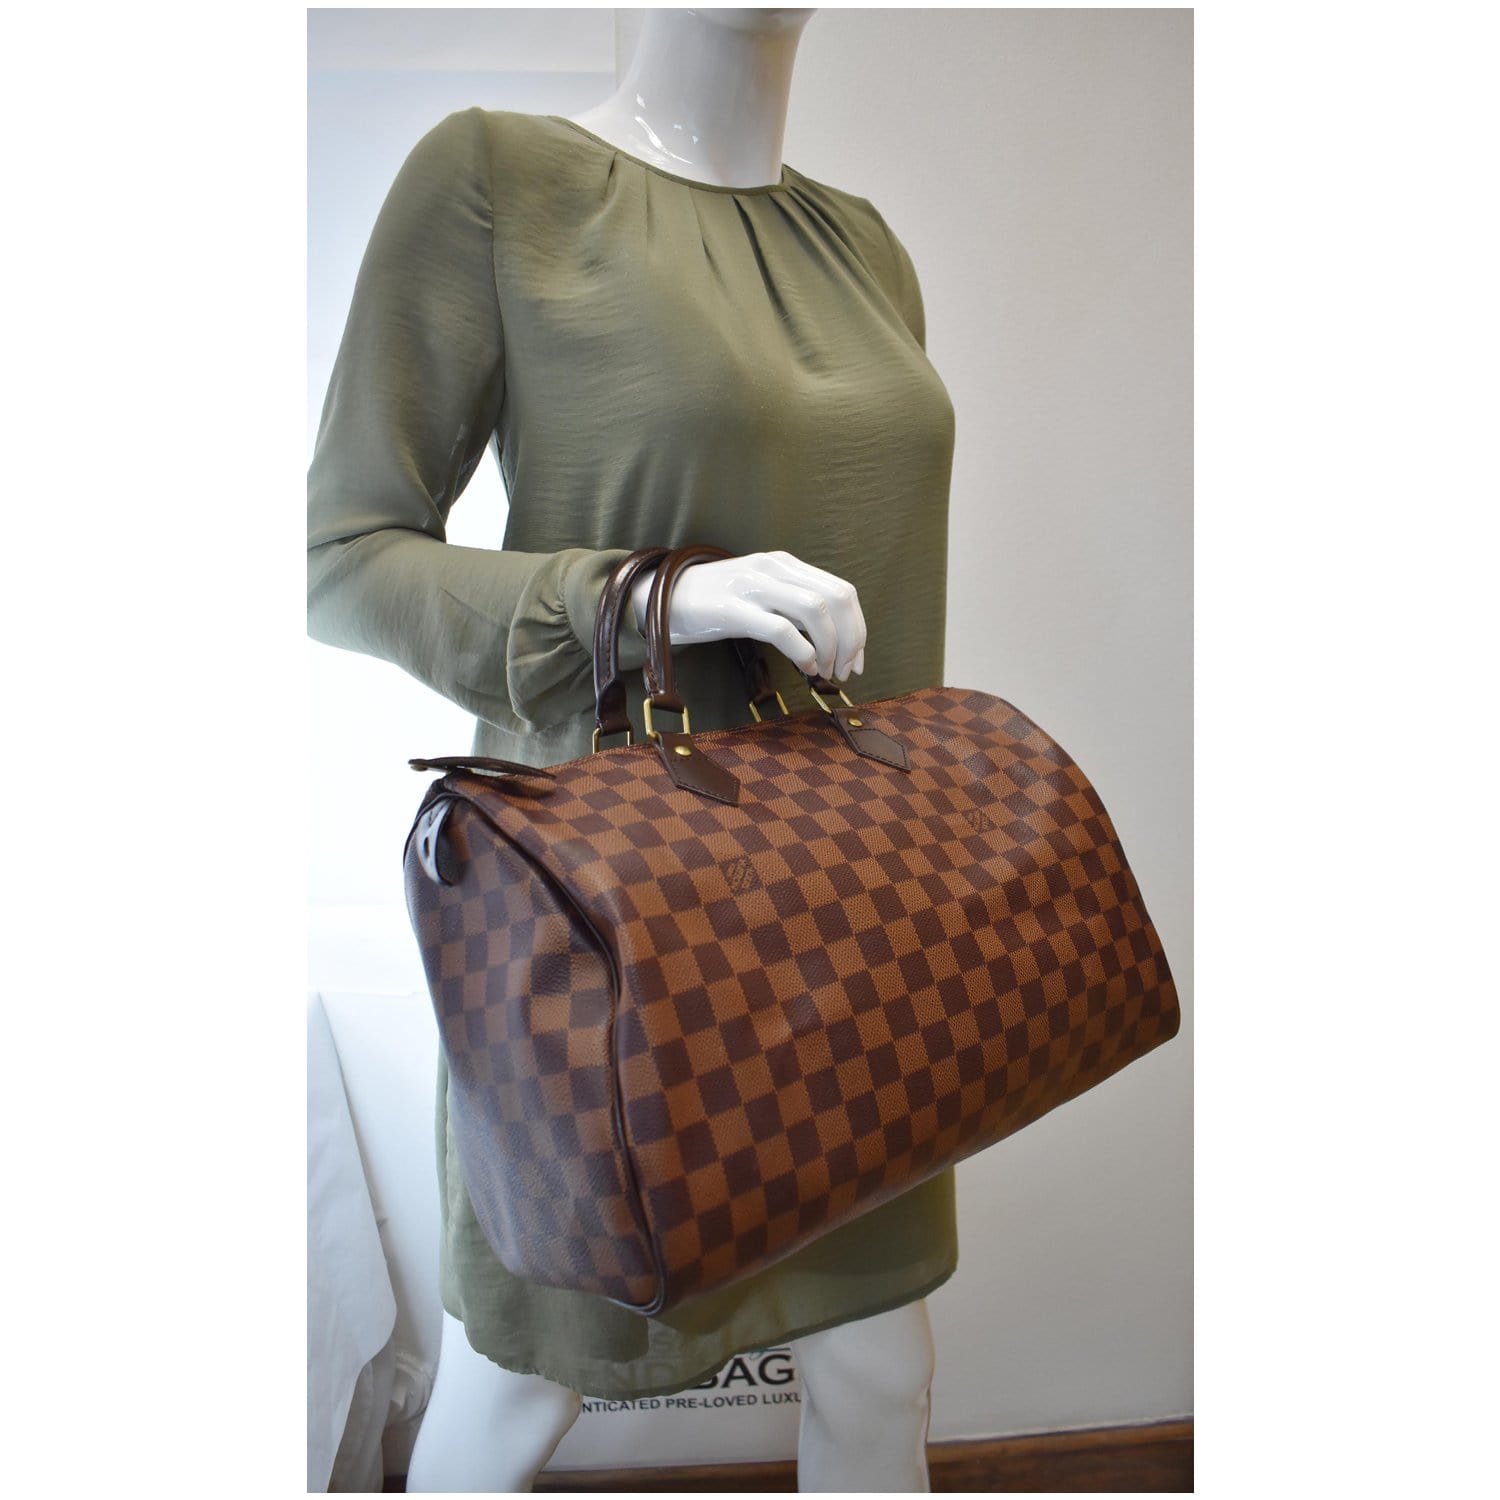 Louis Vuitton, Bags, Louis Vuitton Damier Ebene Speedy 35